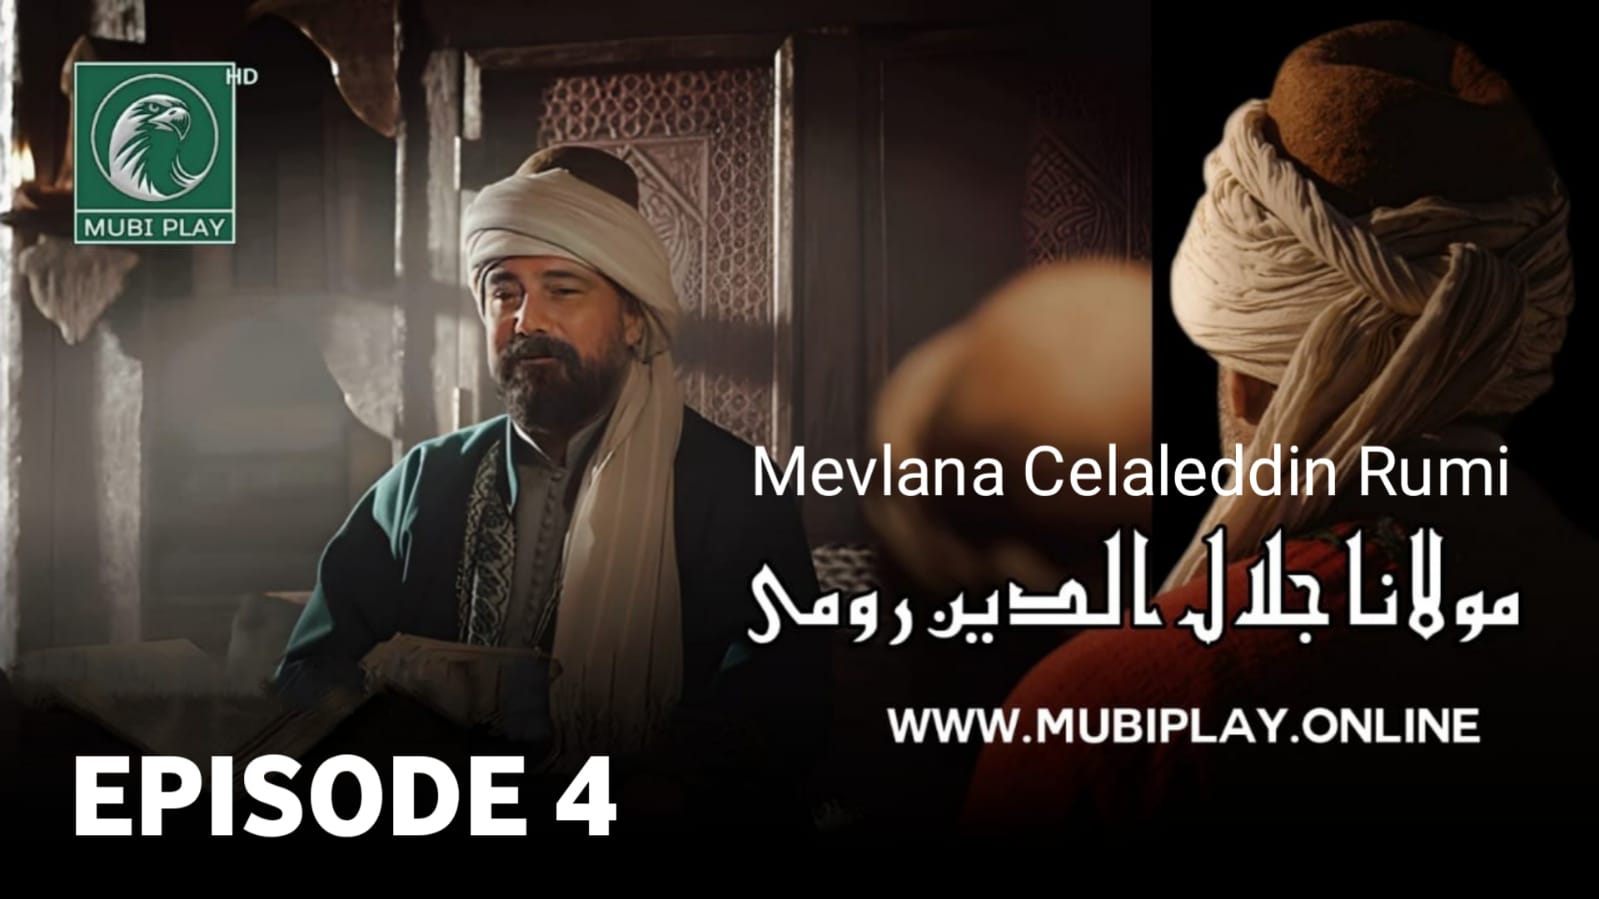 Mevlana Celaleddin Rumi Episode 4 with Urdu & English Subtitles by MubiPlay